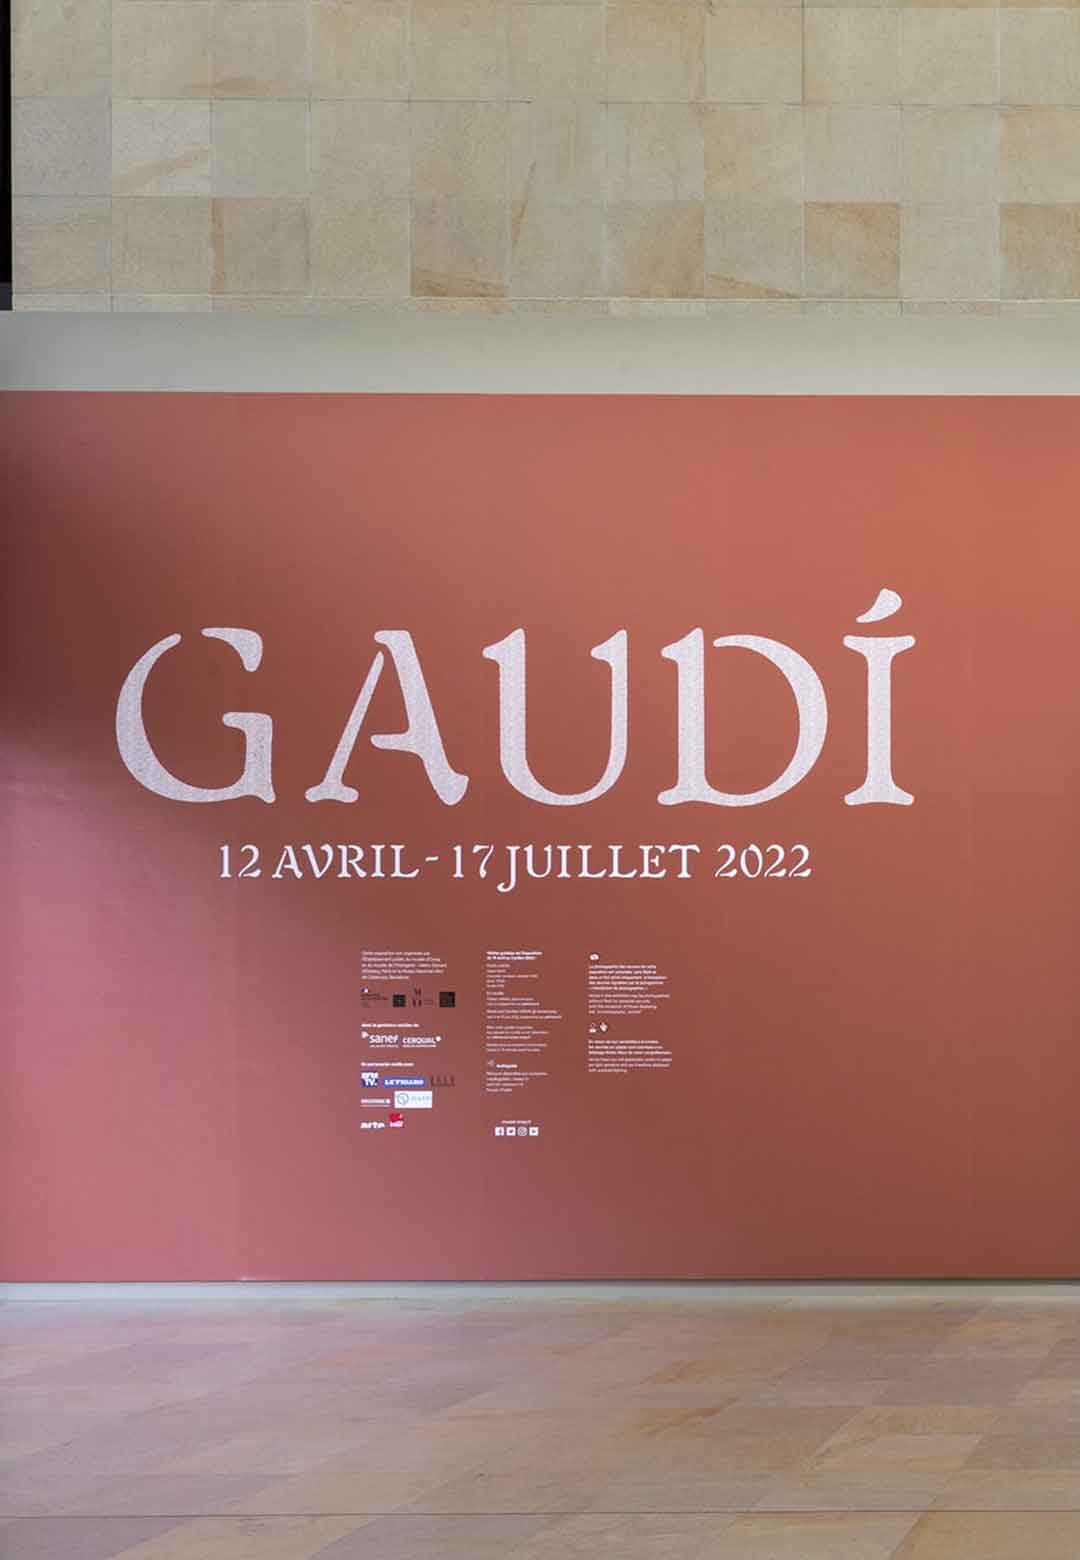 Musee d’Orsay unveils rare ‘Gaudi’ exhibition in Paris